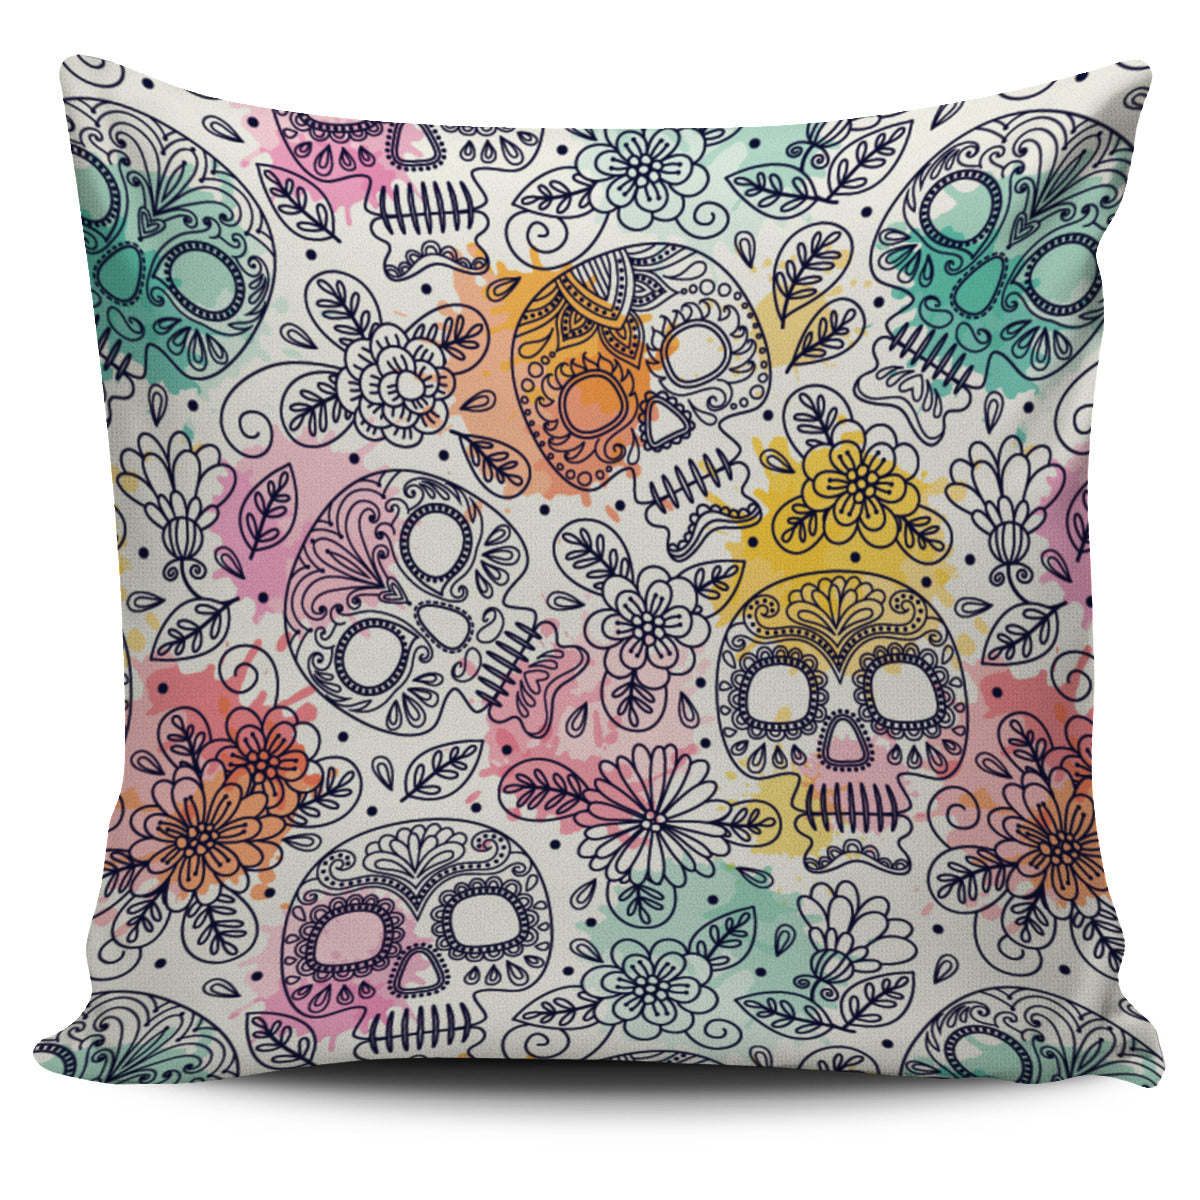 Watercolor Skull Pillow Cover - Hello Moa